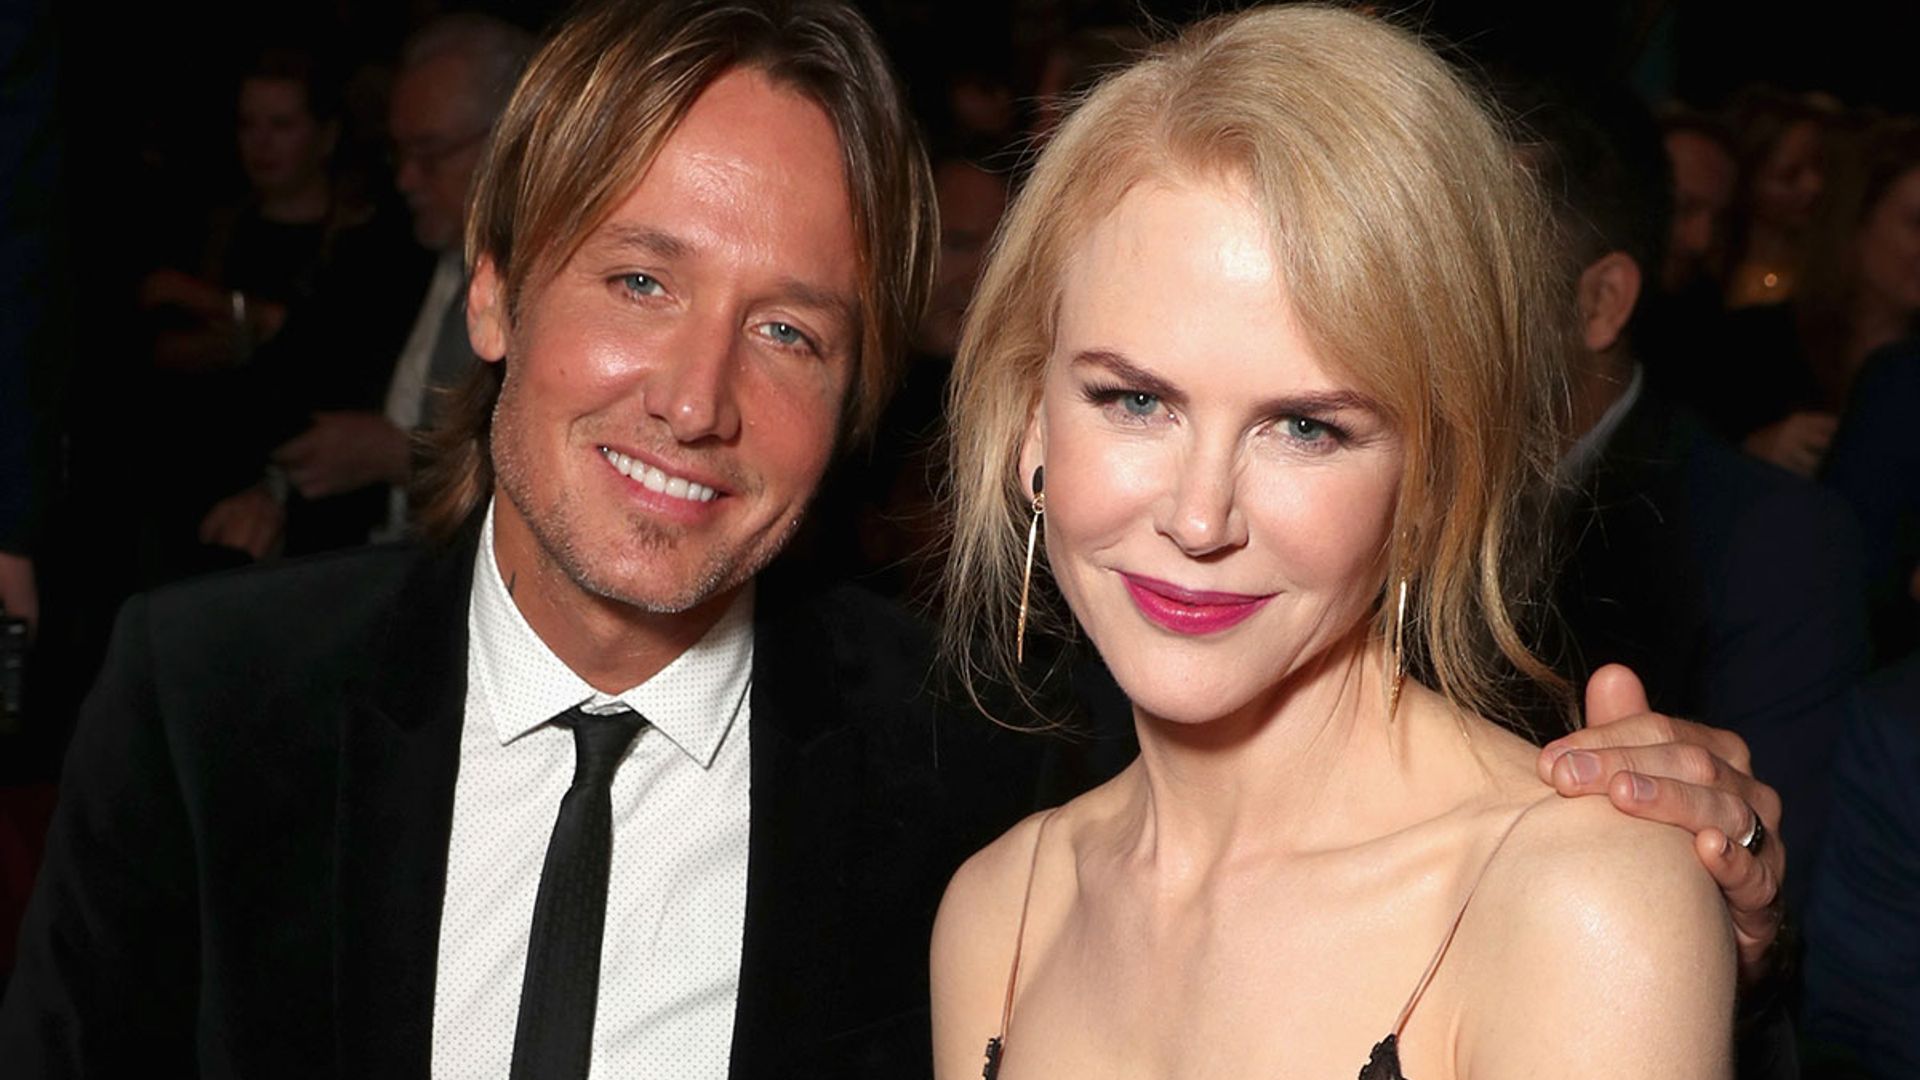 Nicole Kidman's $20,000 wedding dress belongs on Bridgerton - see photo